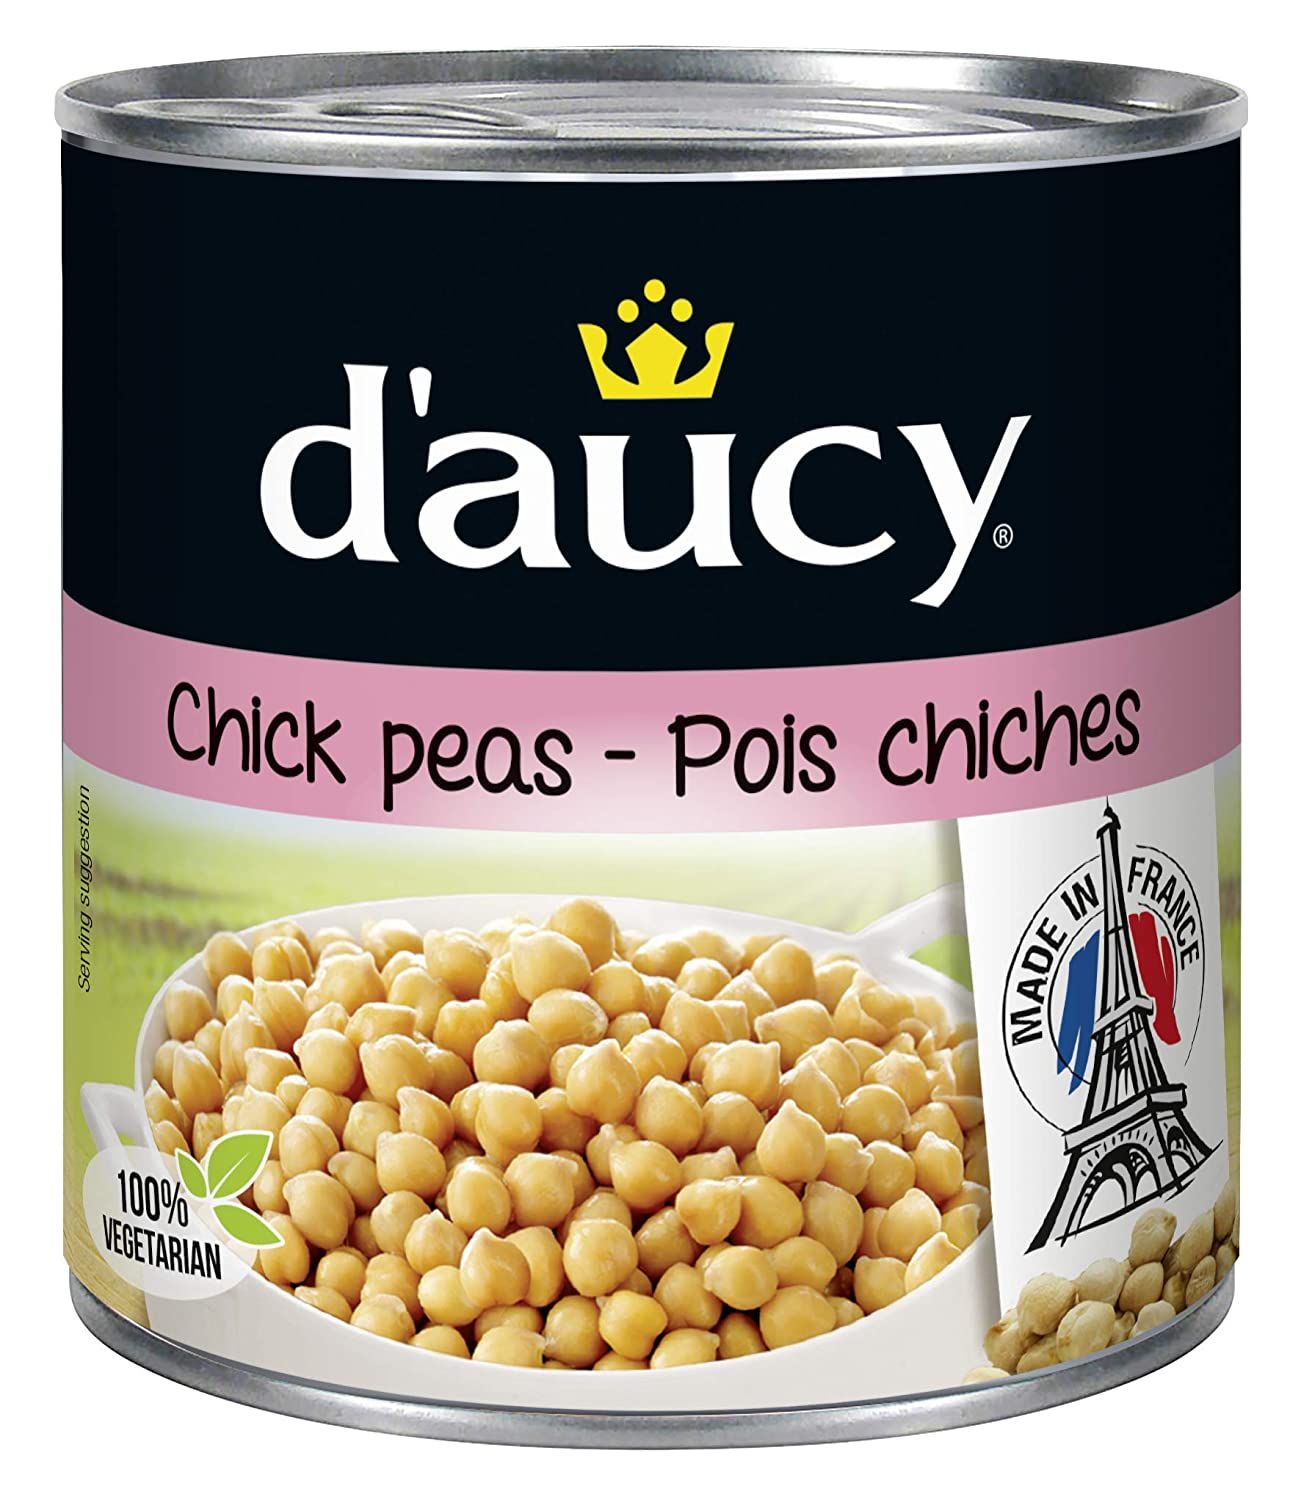 Daucy Chick Peas Image